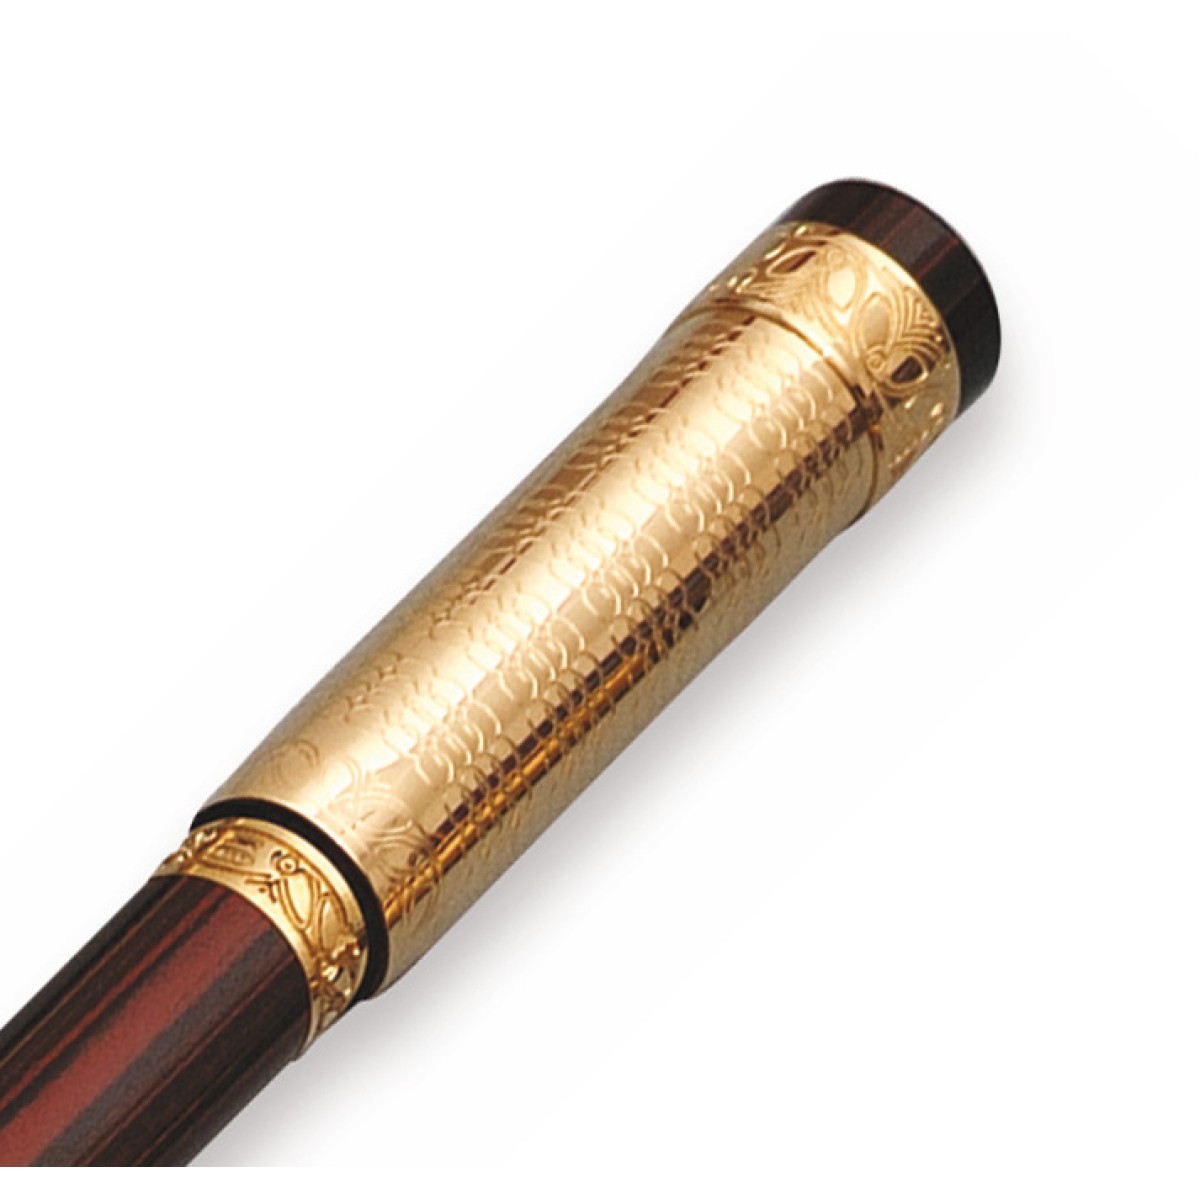 Aurora - Nobile - 18k Solid Gold Cap - Fountain Pen